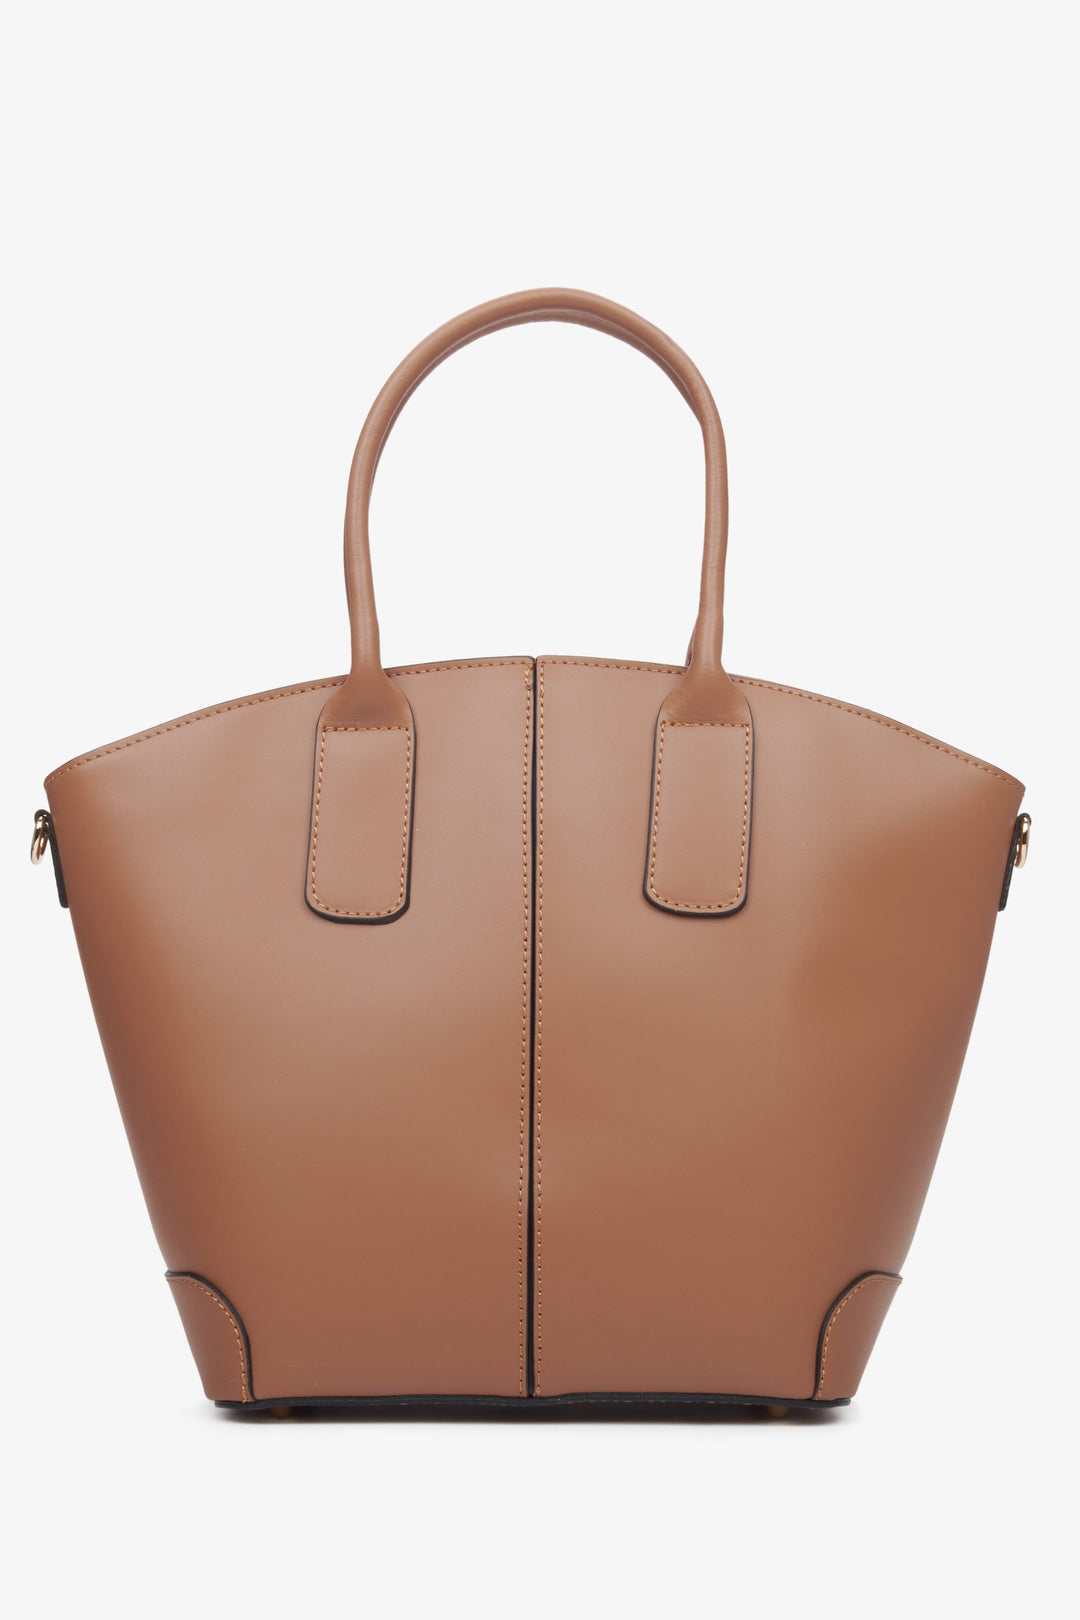 Estro women's brown shopper bag made of Italian genuine leather